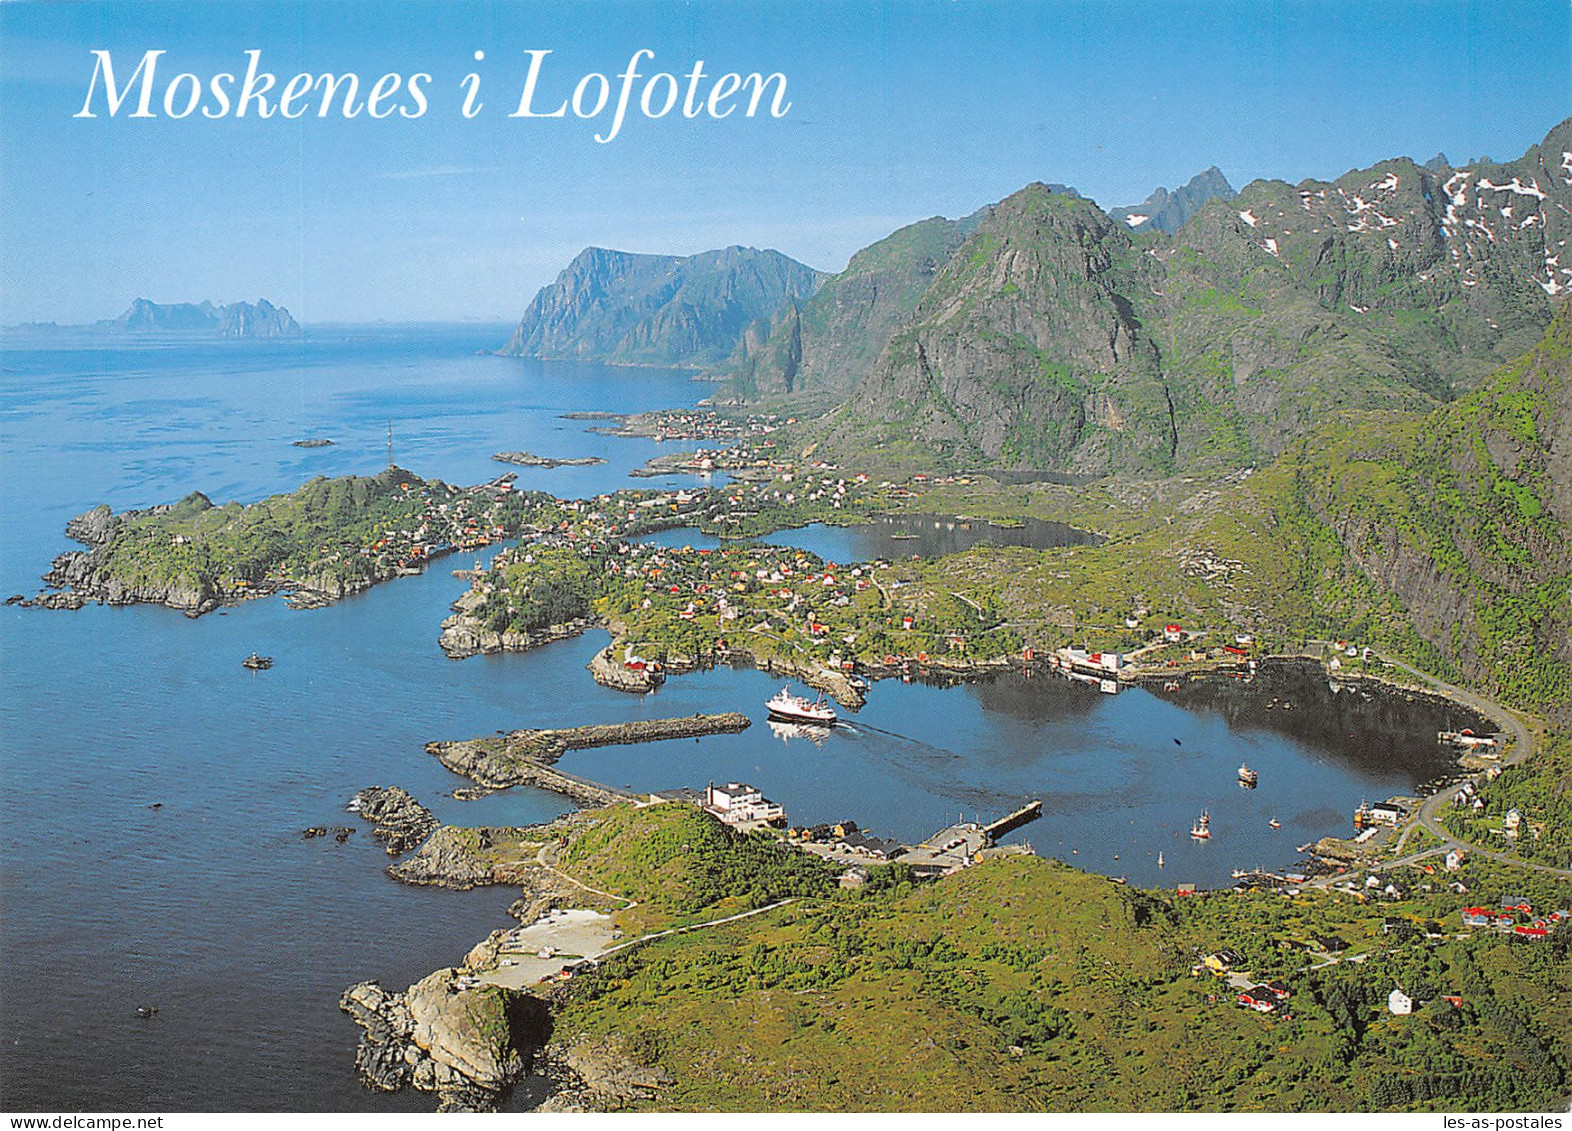 NORGE MOSKENES I LOFOTEN - Norway